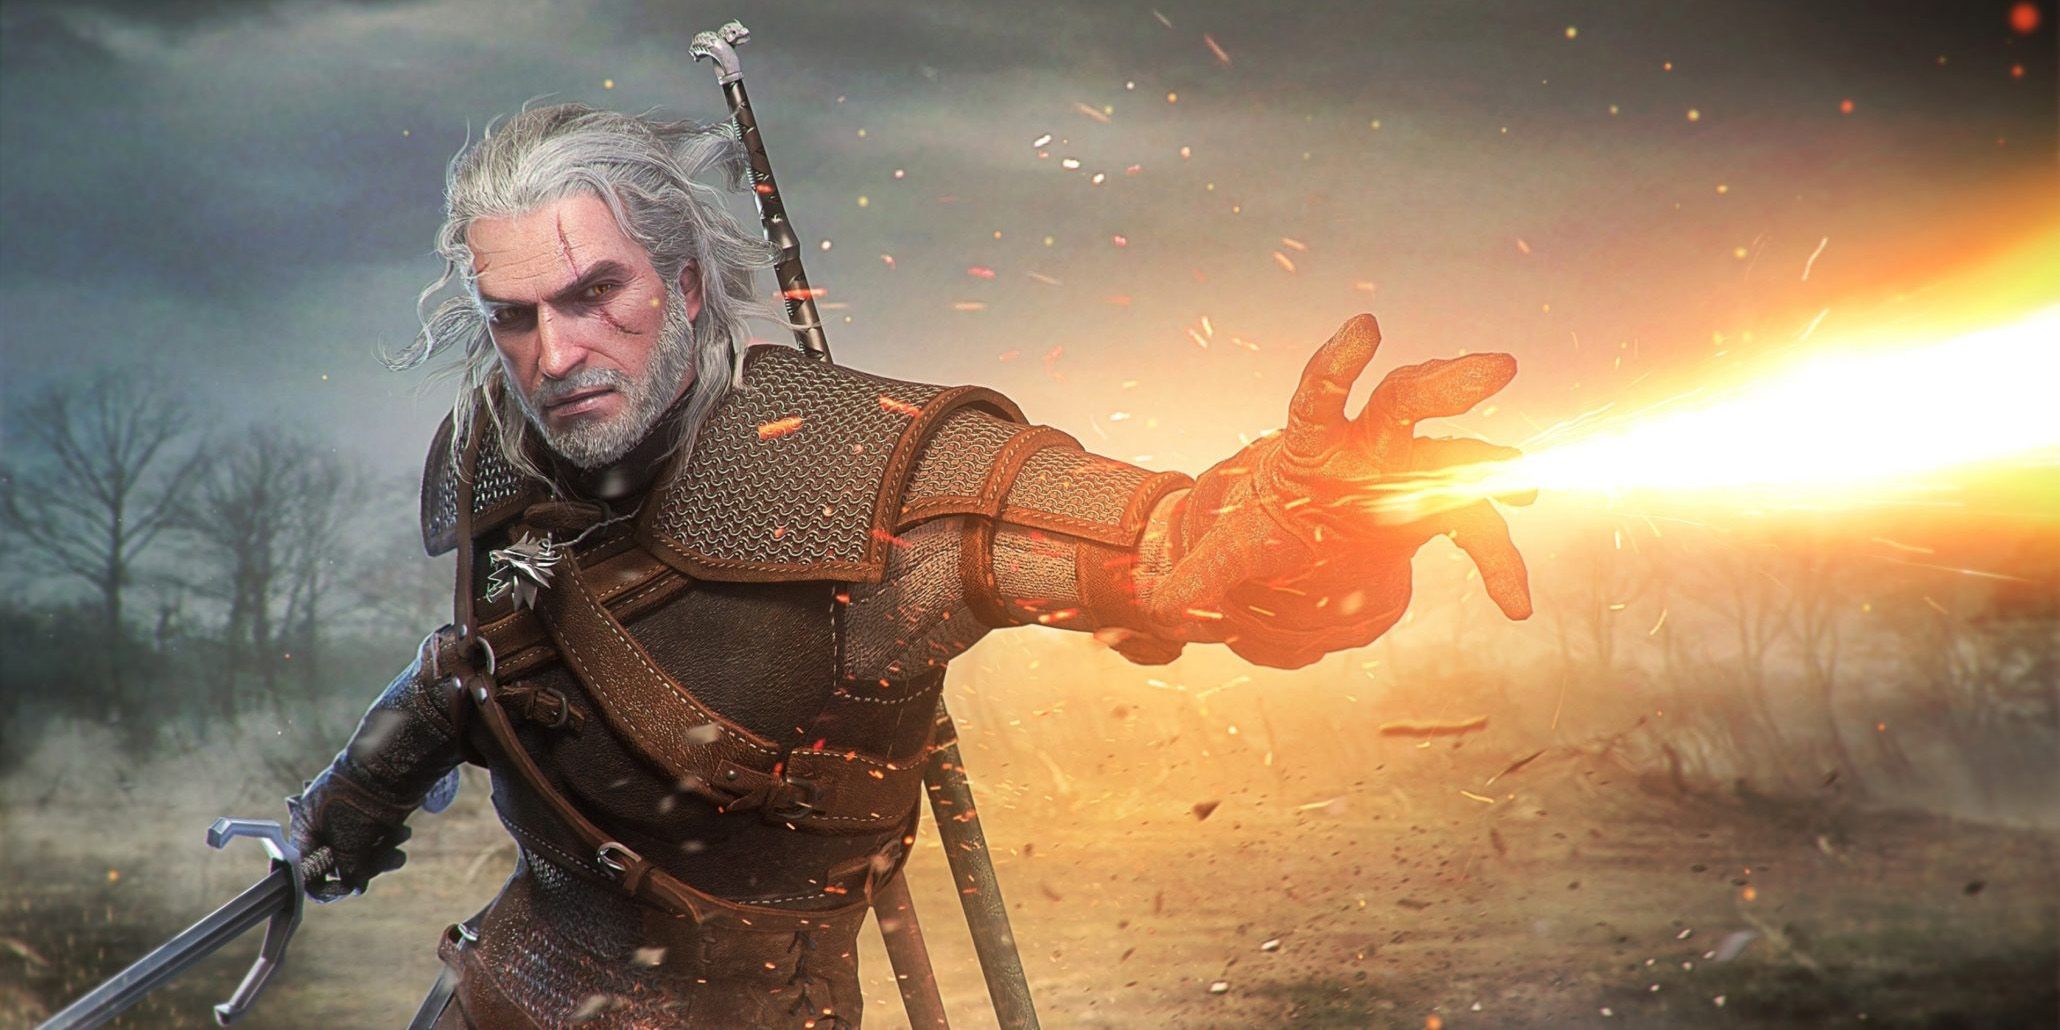 Geralt appears in SoulCalibur 6